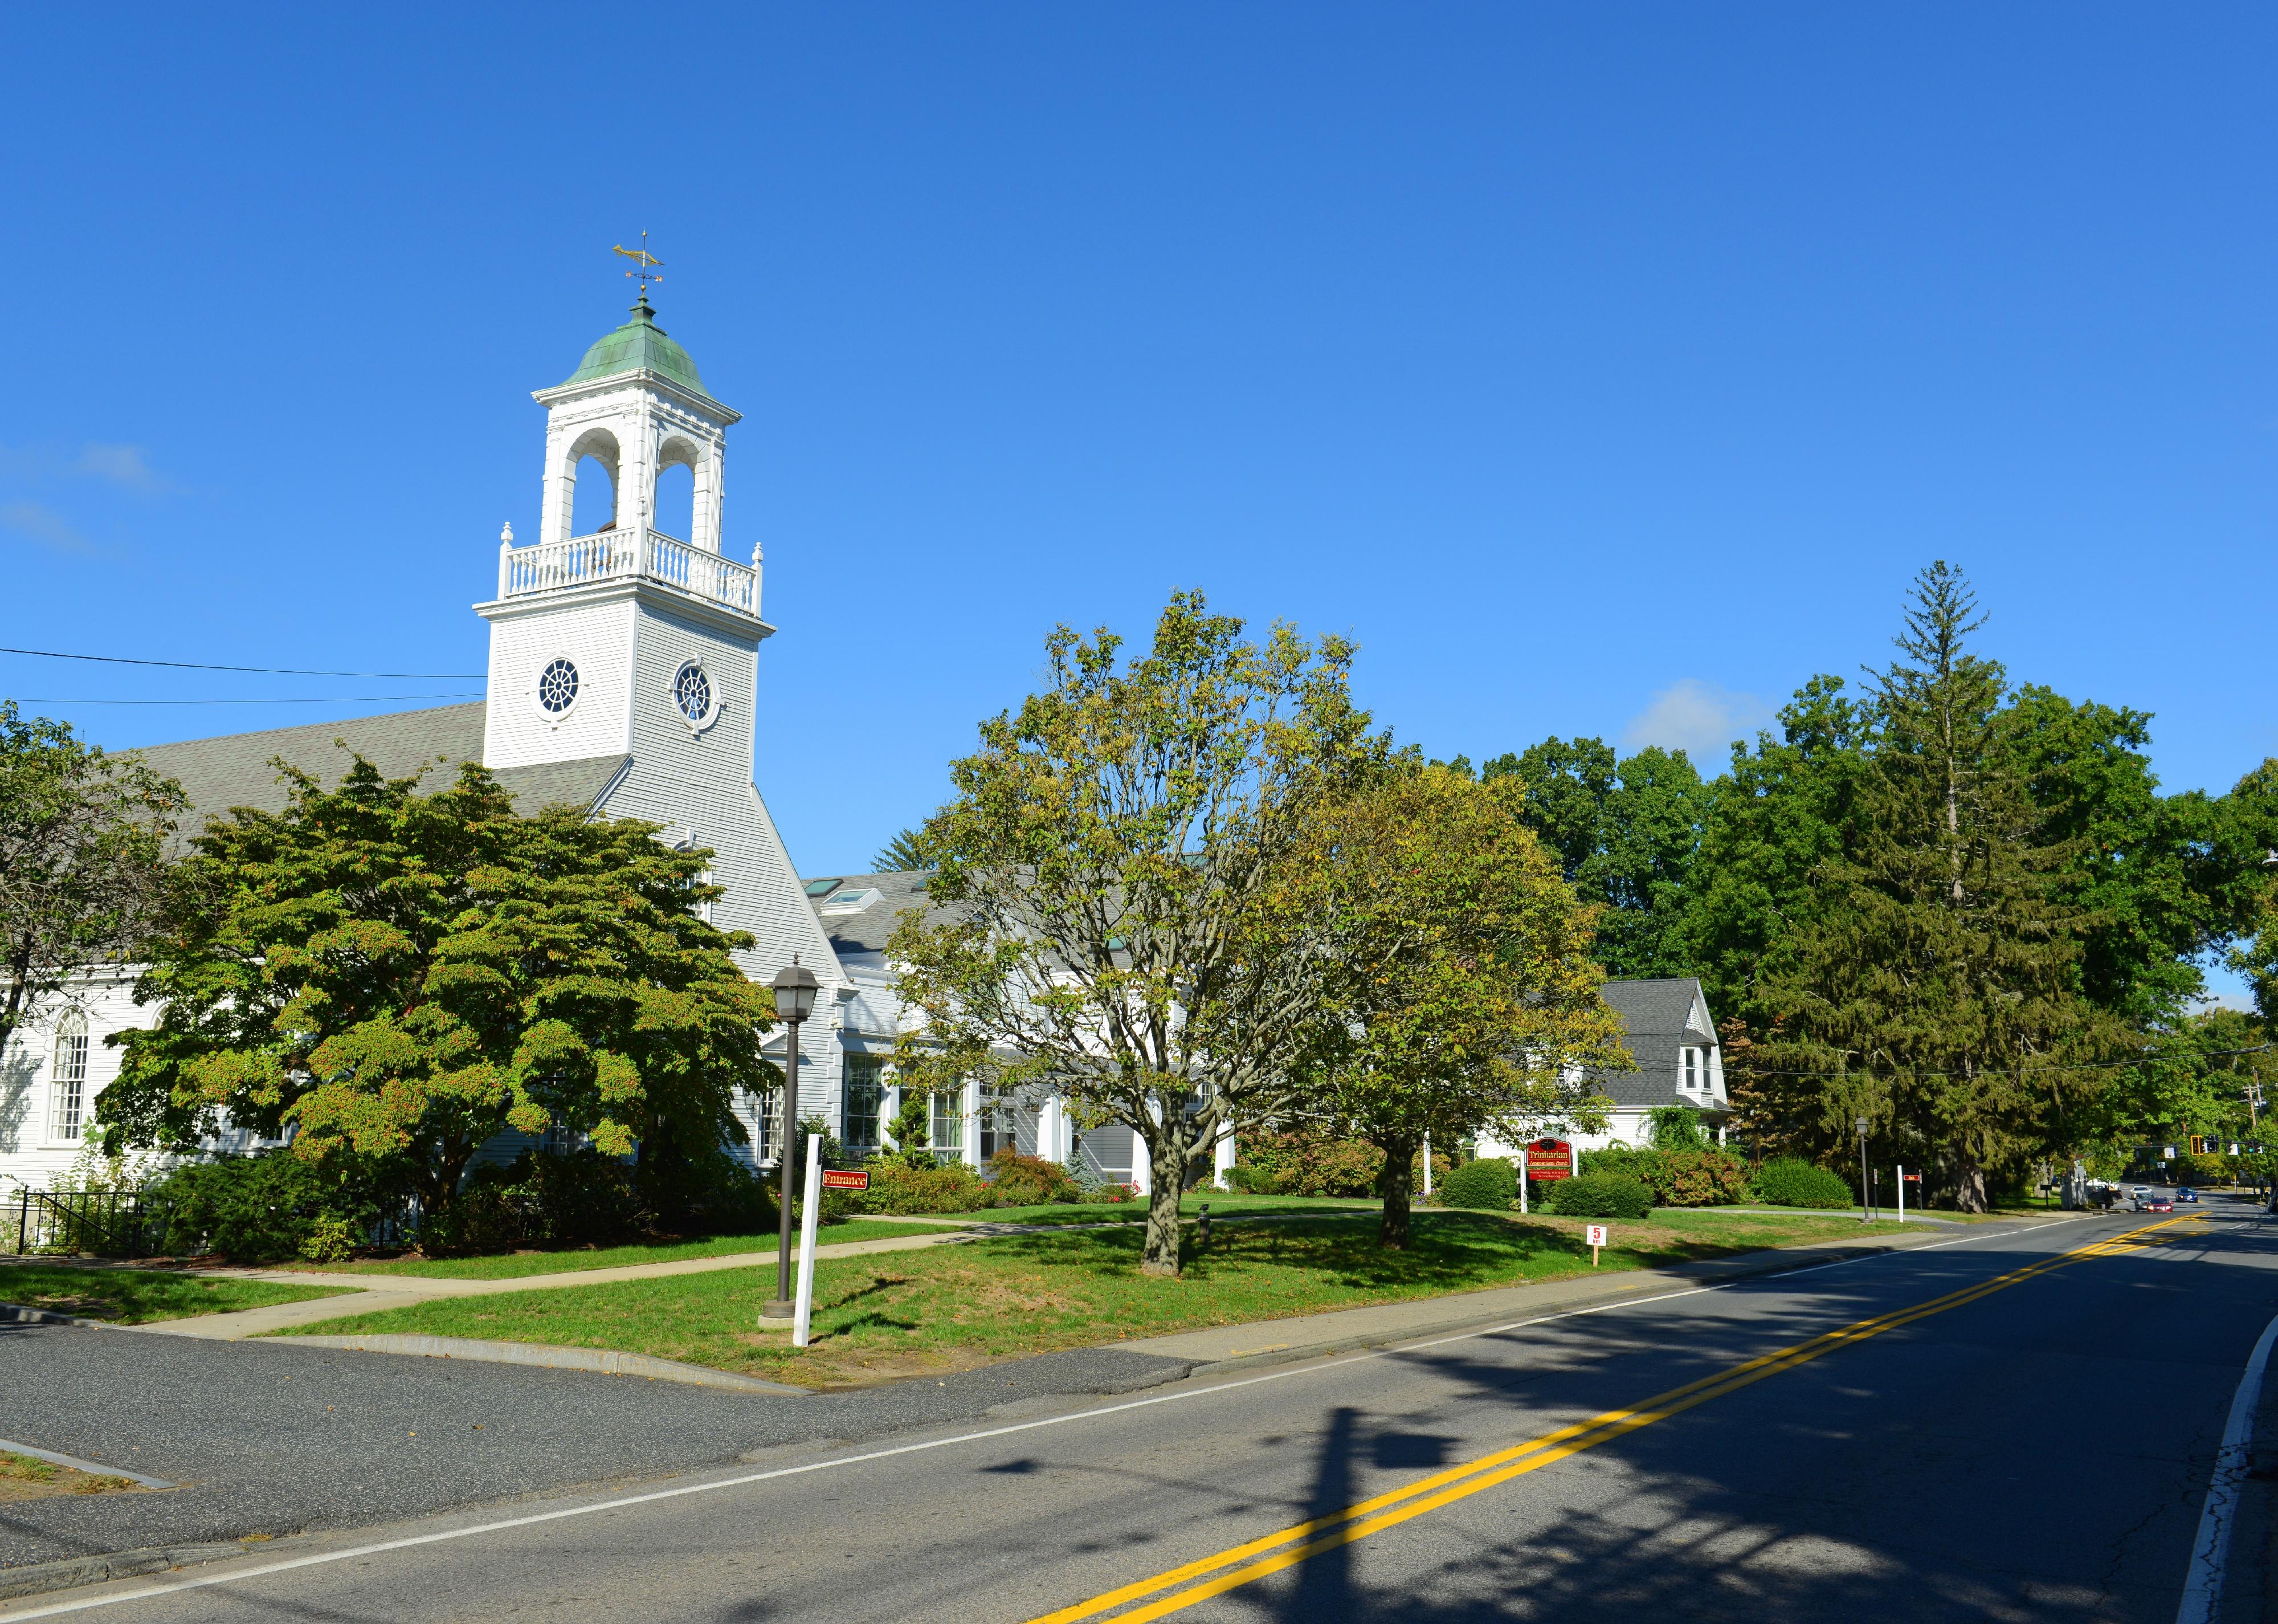 Trinitarian Congregational Church in historic town center of Wayland, Massachusetts